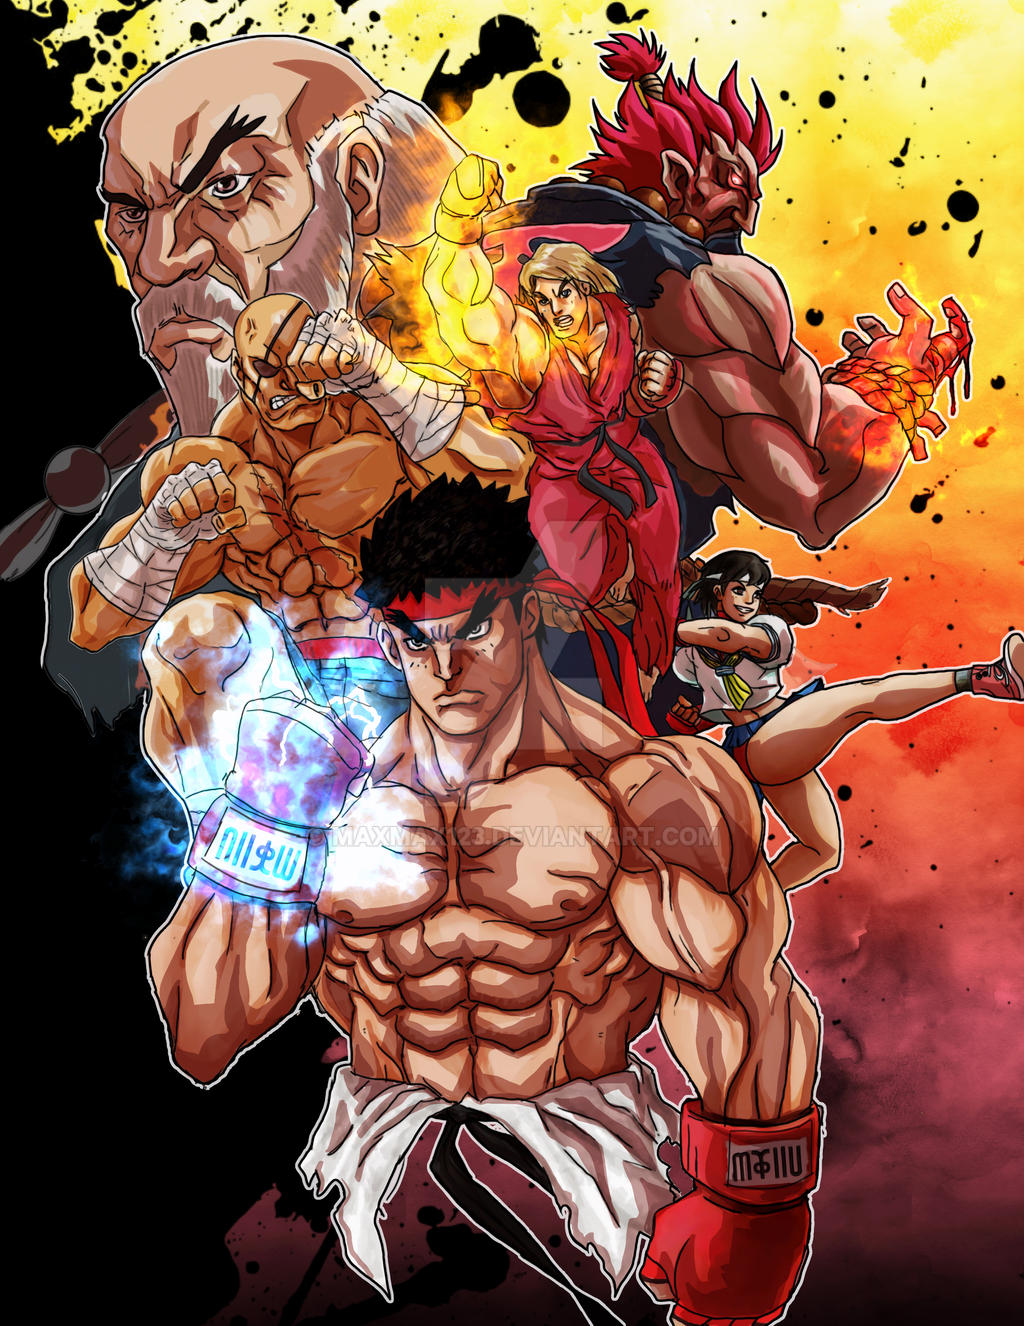 Evil Ryu (Street Fighter IV) by acecore2k on DeviantArt